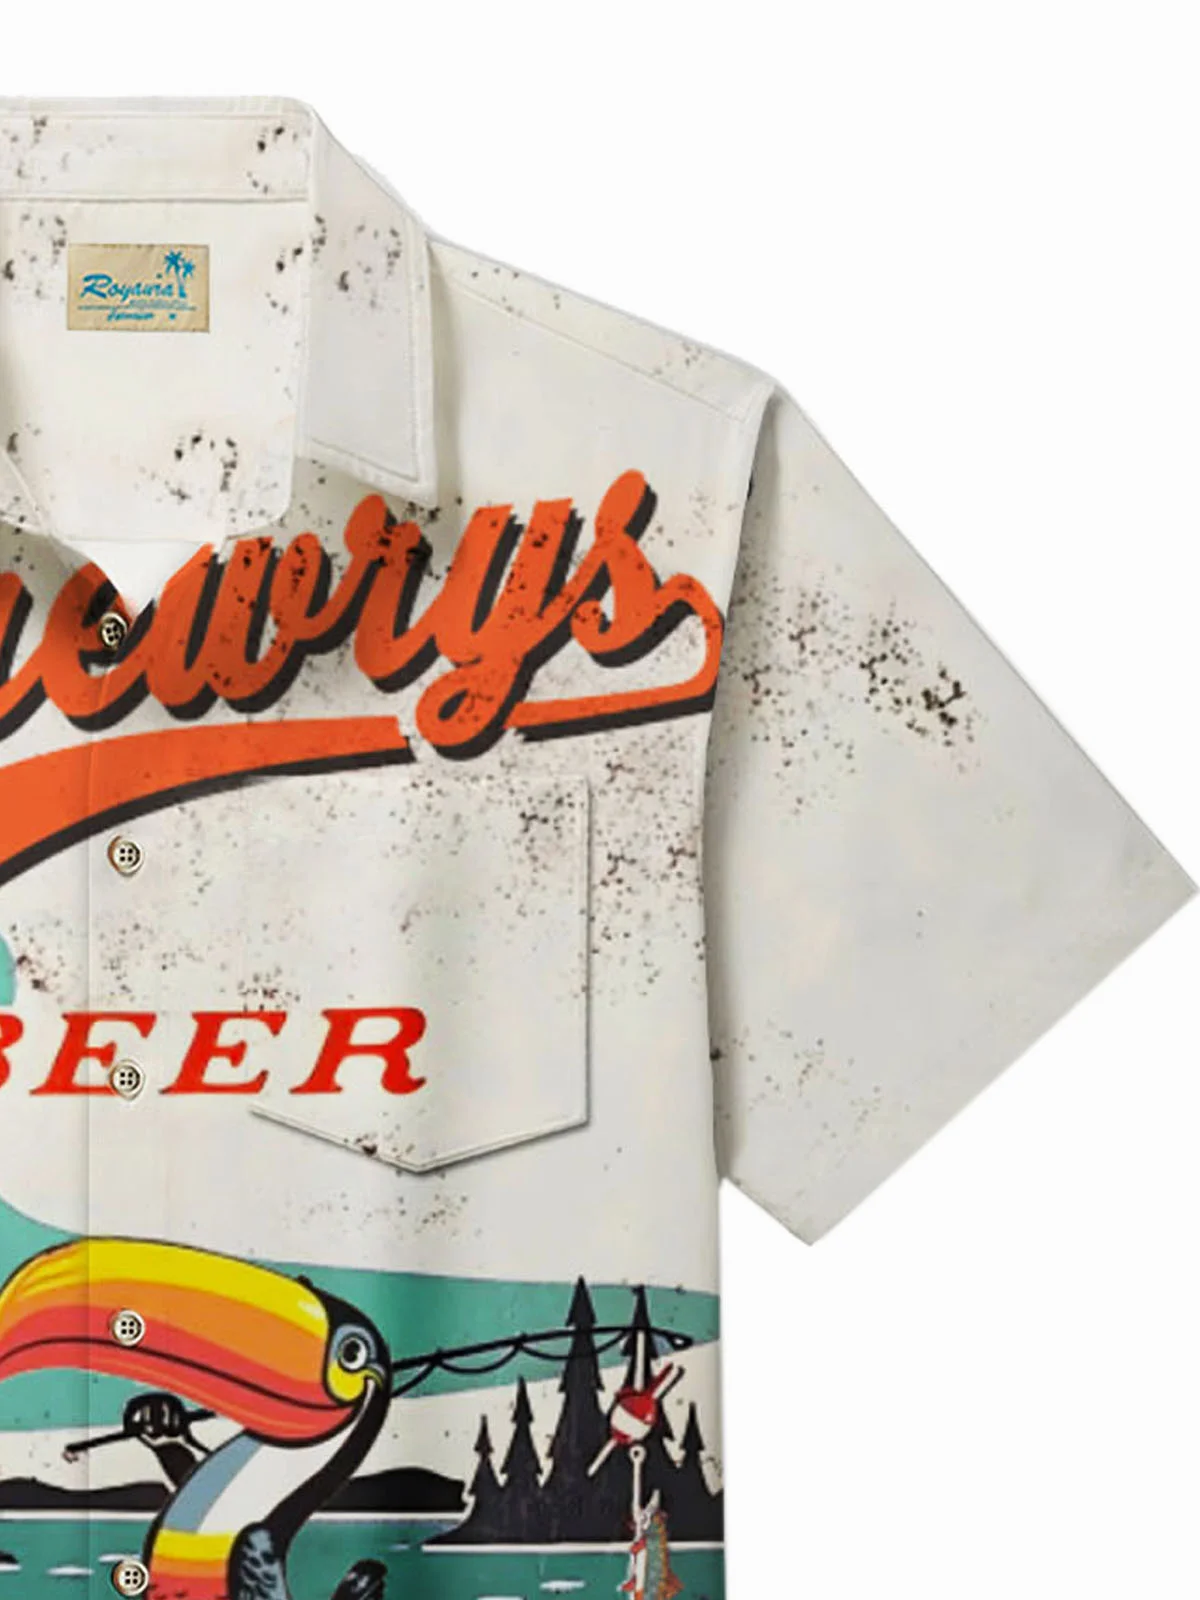 Royaura® Drewrys Beer Parrot Fishing Print Men's Button Pocket Short Sleeve Shirt